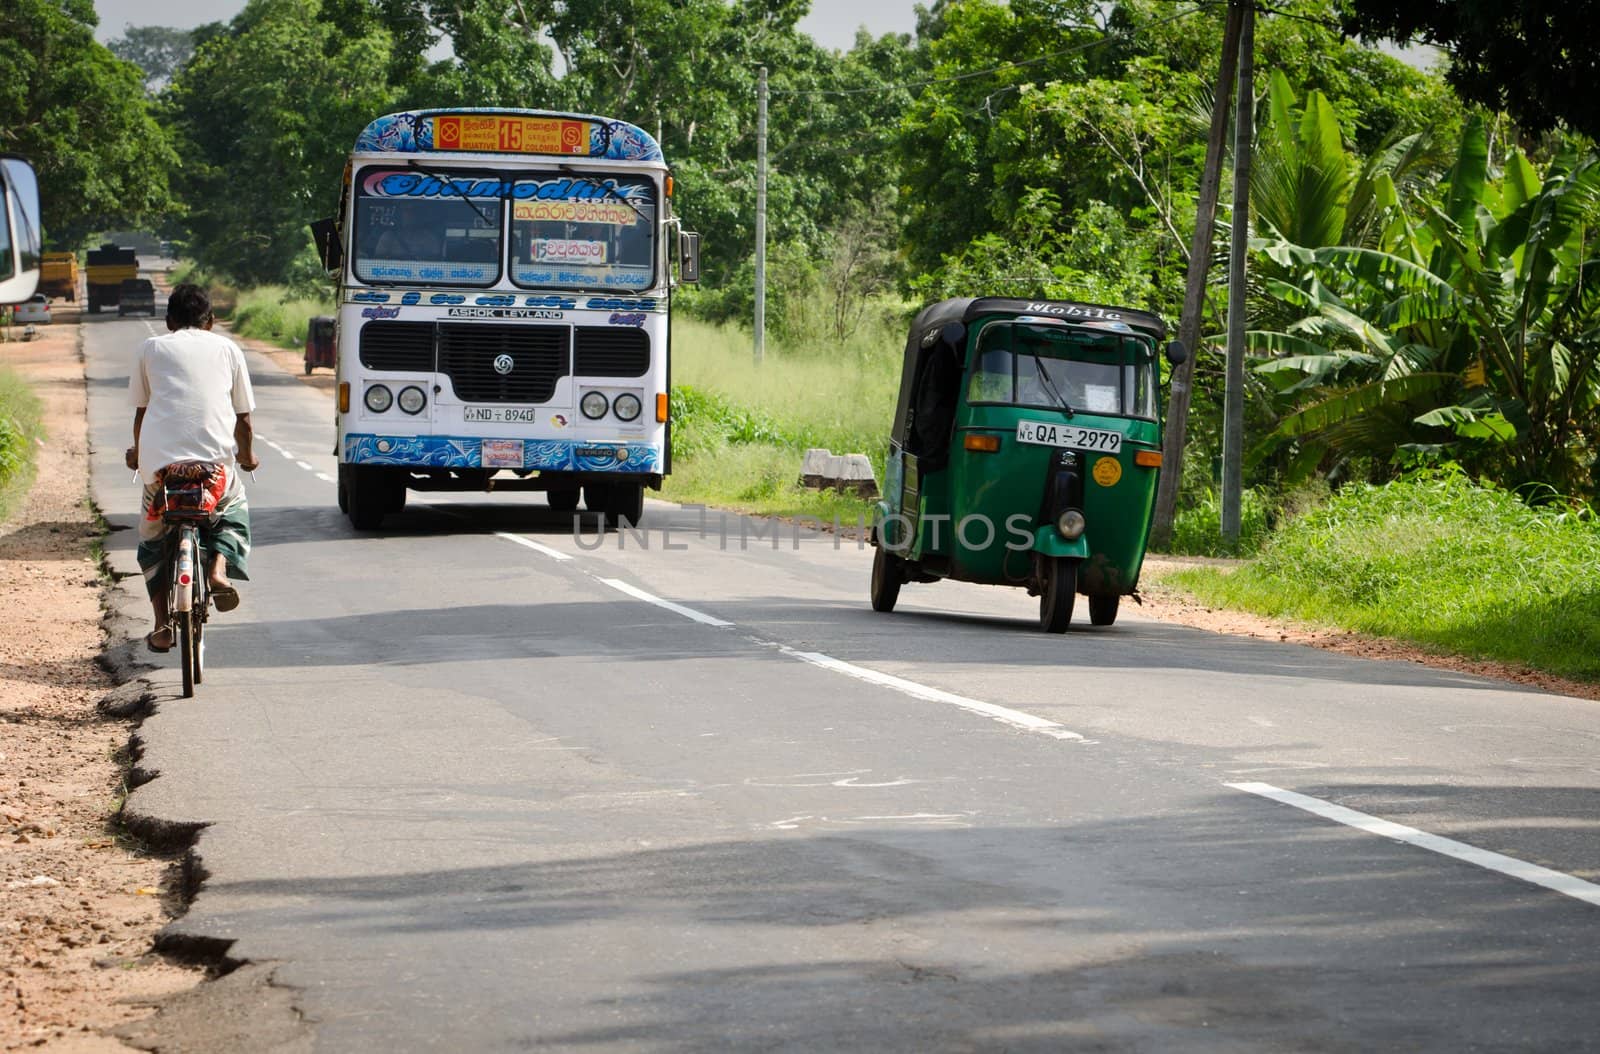 Habarana, Sri Lanka - December 6, 2011: Regular public bus from Muative to Colombo, bicycle and tuk-tuk ob narrow road. There are the most popular public transport type in Sri Lanka.